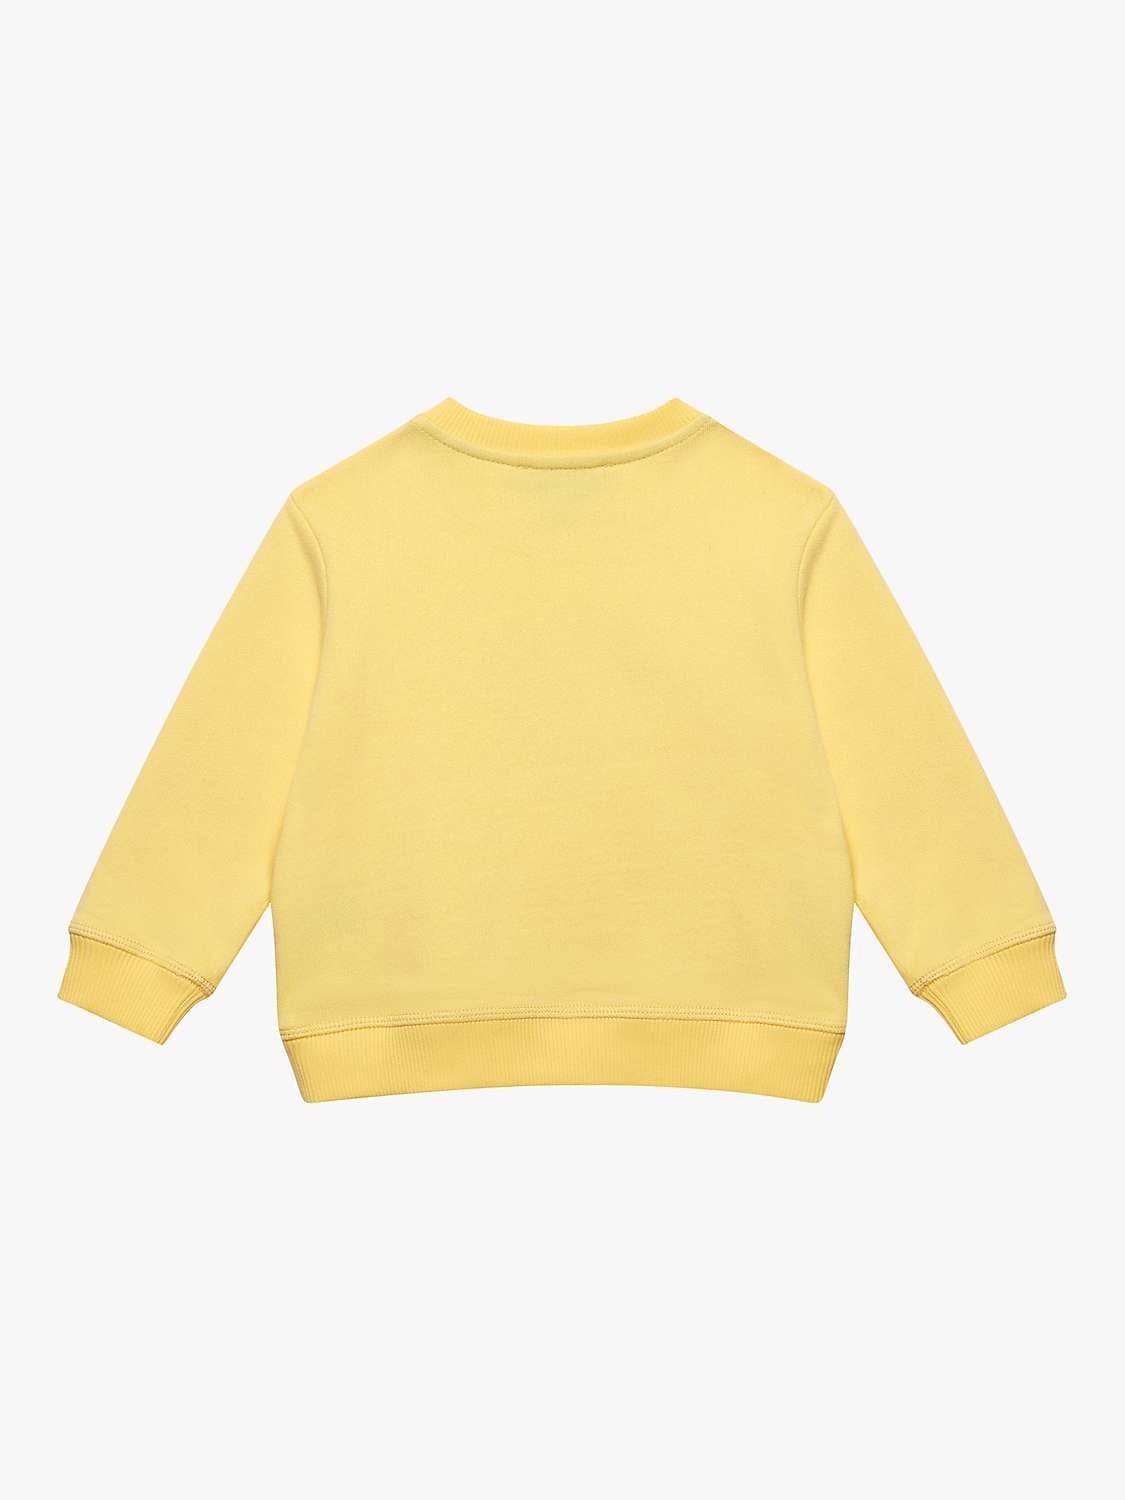 Buy Trotters Baby Elysian Day Applique Heart Sweatshirt, Lemon/Multi Online at johnlewis.com